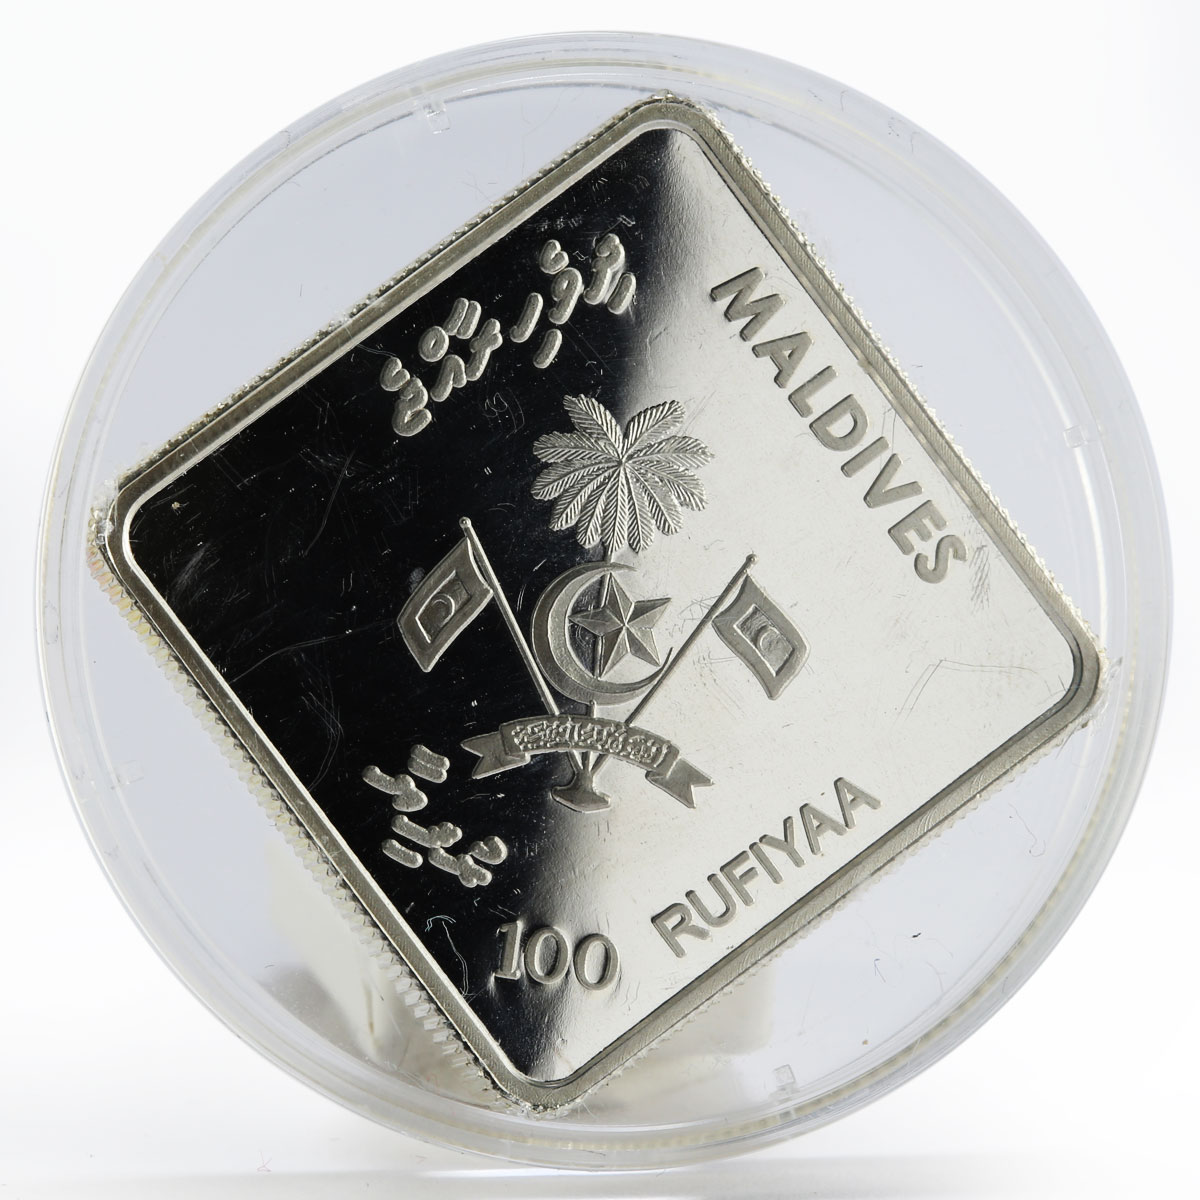 Maldives 100 rufiyaa Millennium silver proof square coin 2000